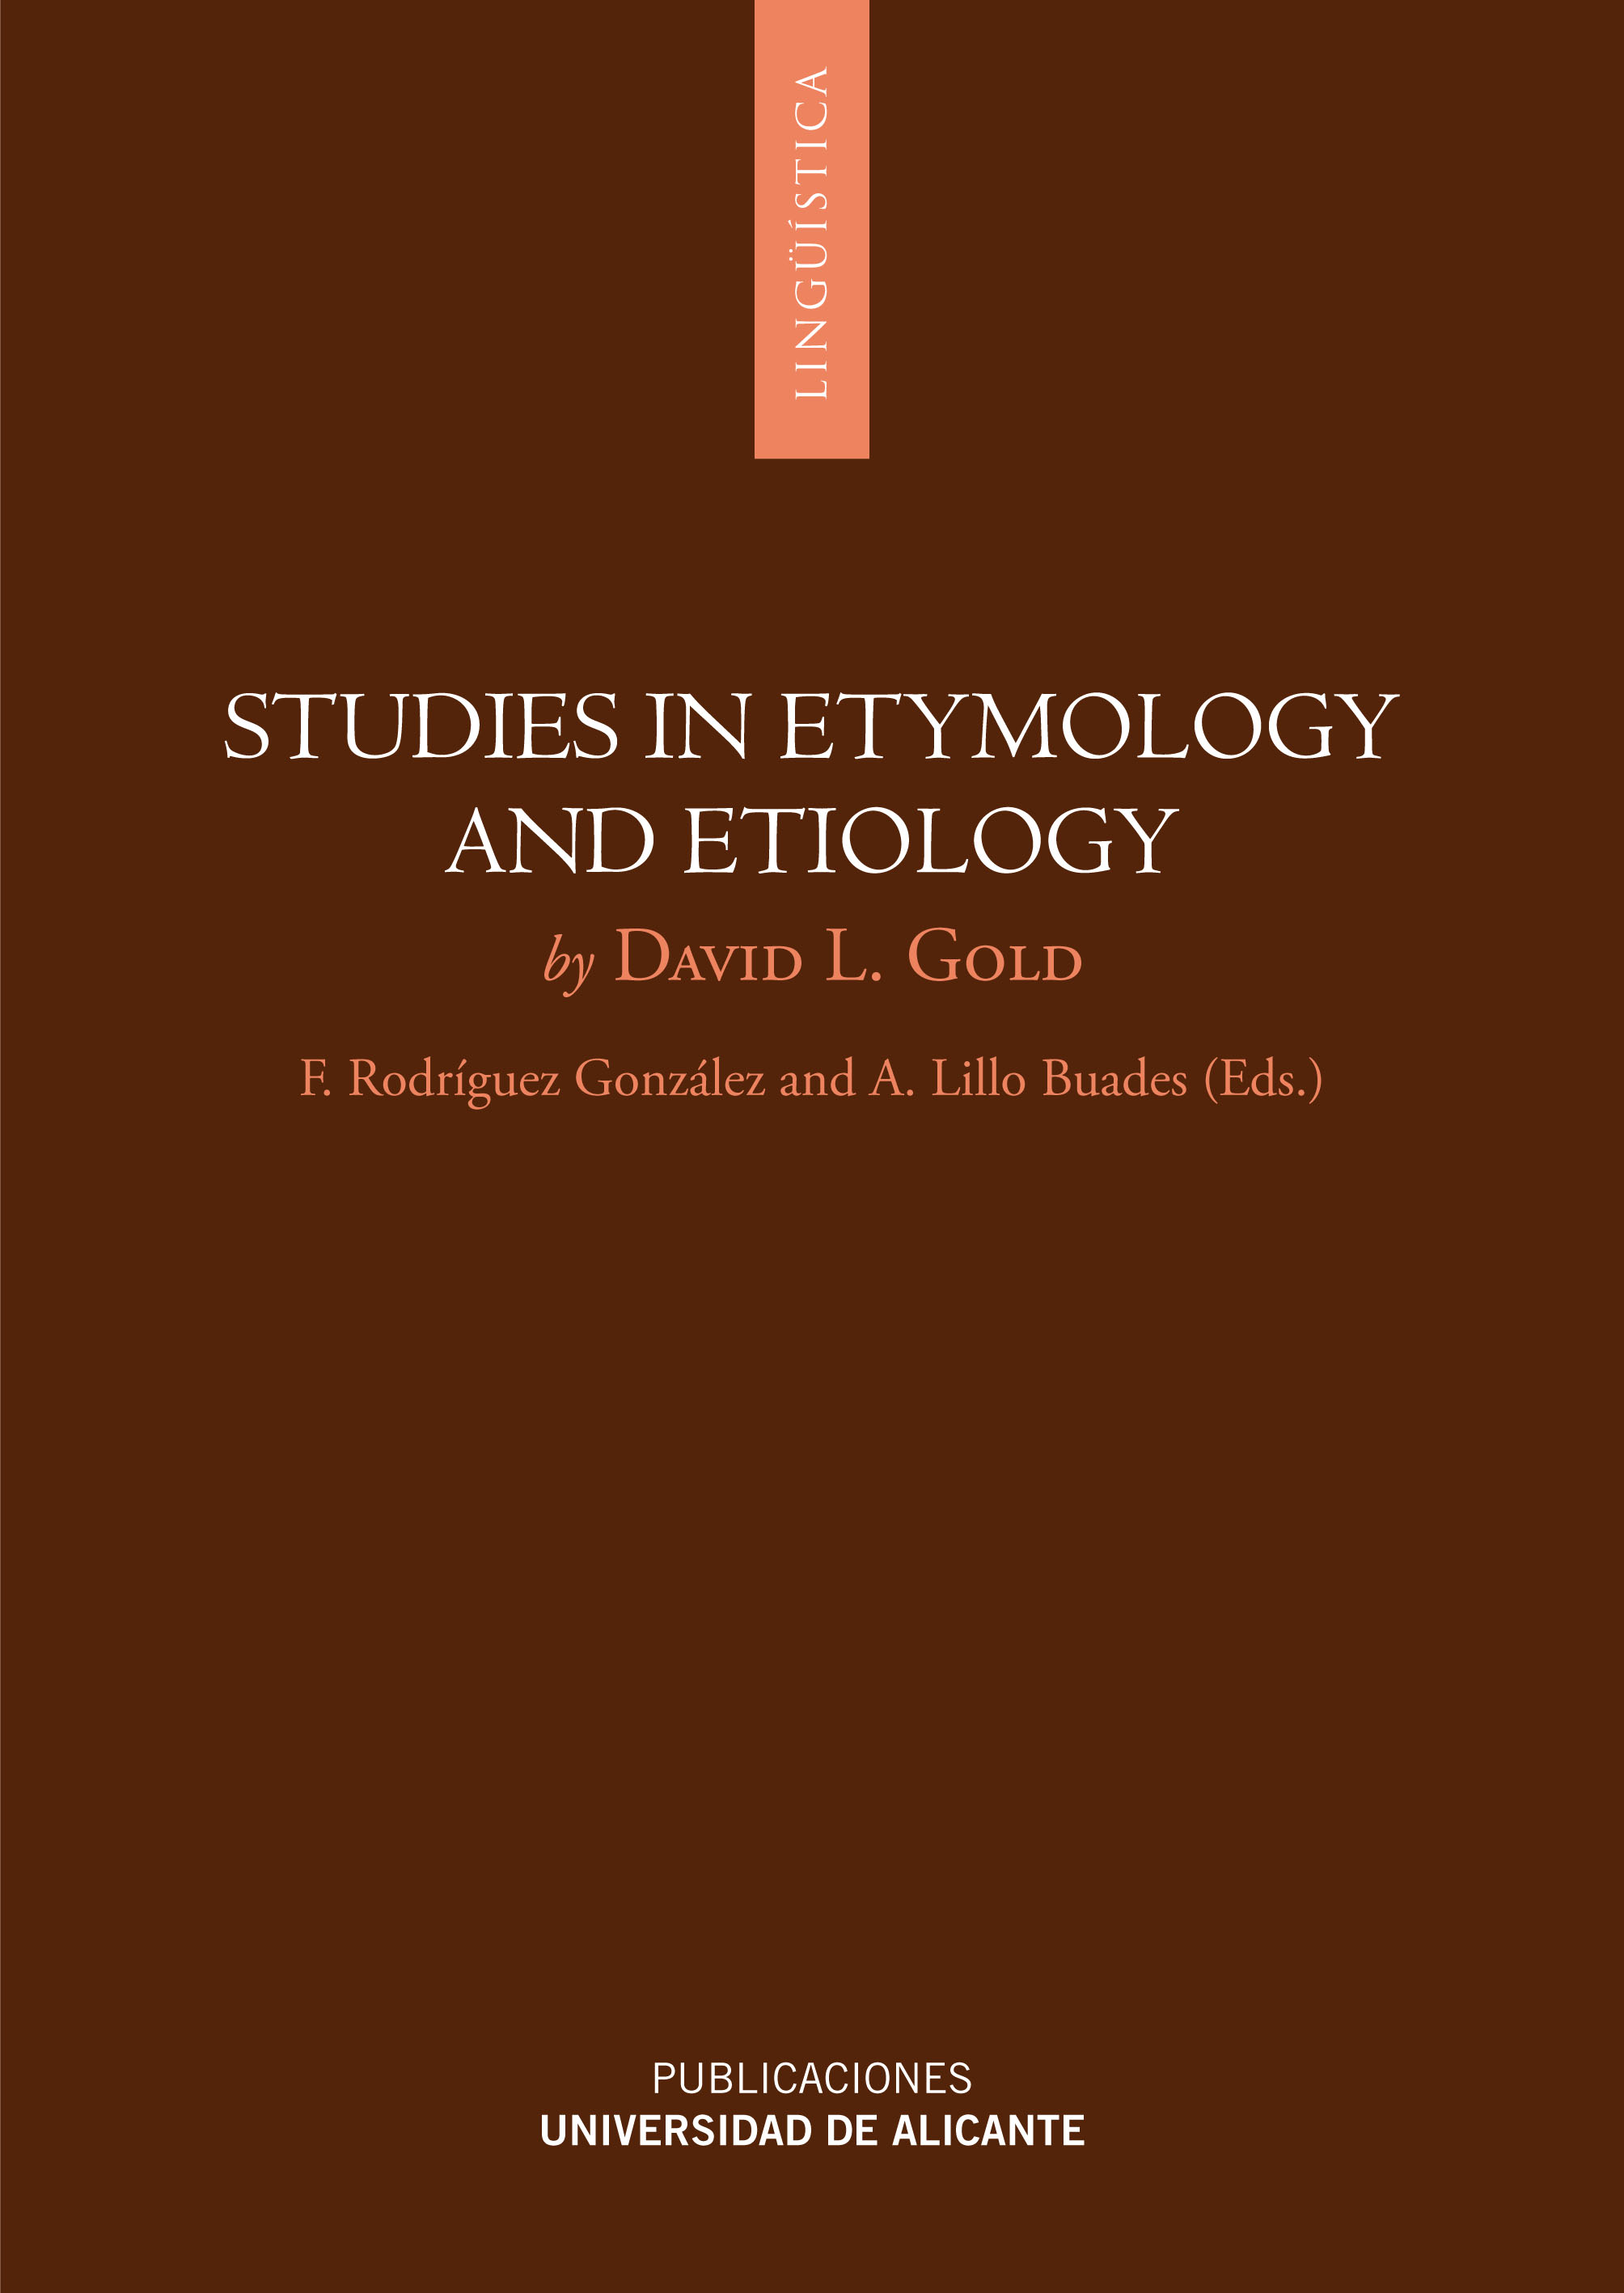 Studies in Etymology and Etiology